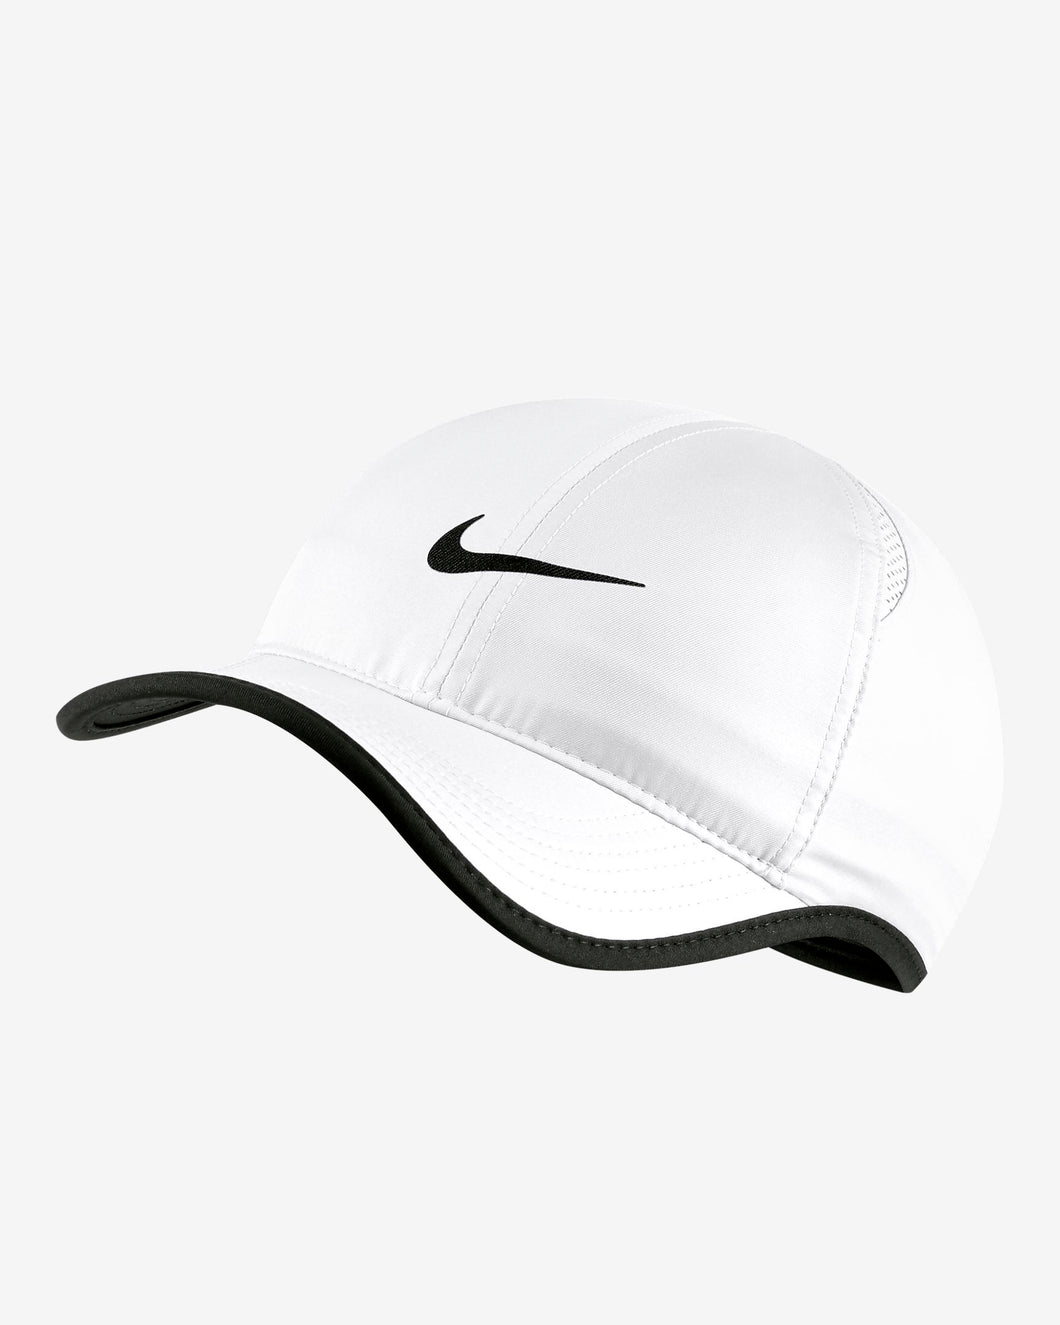 Nike Sportswear AeroBill Featherlight (One Size)